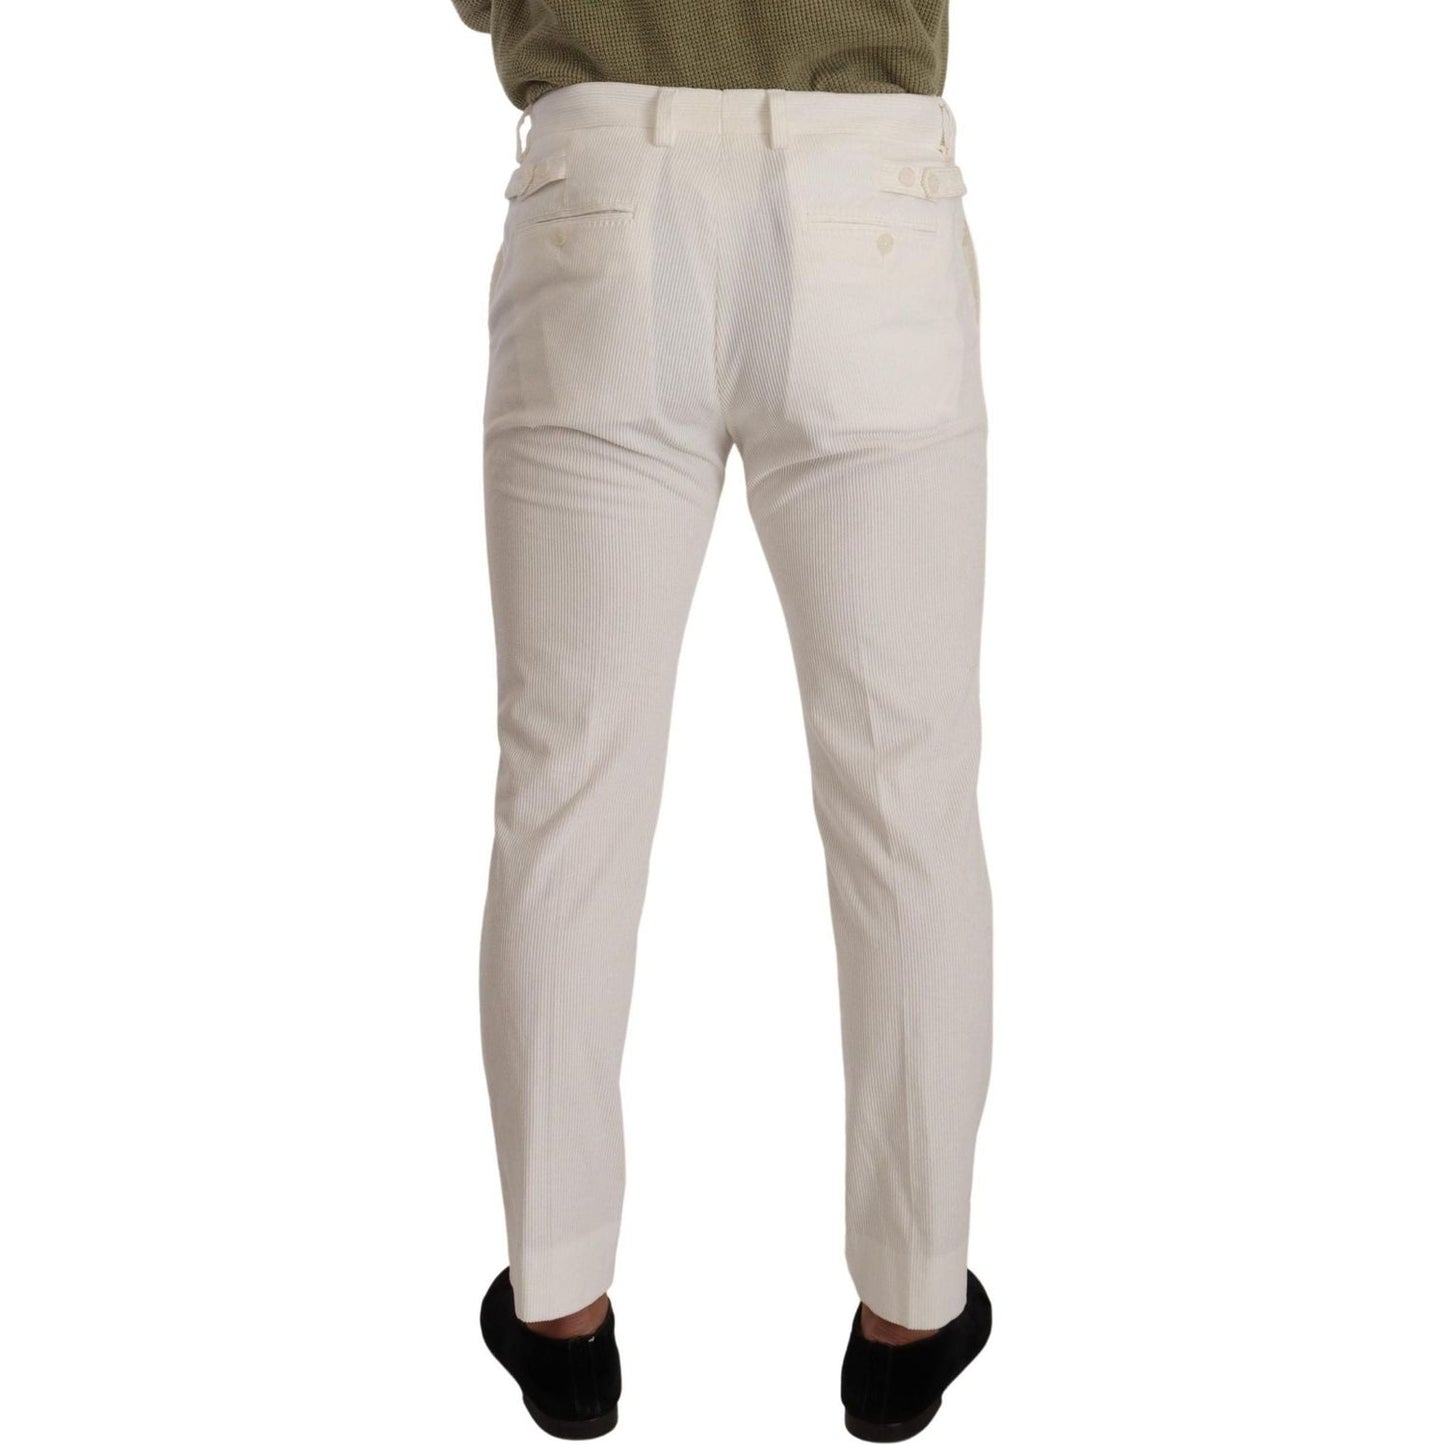 Dolce & Gabbana Elegant Slim Fit Cotton Trousers white-cotton-skinny-corduroy-trouser-pants IMG_6594-scaled-cac2ebfd-e98.jpg